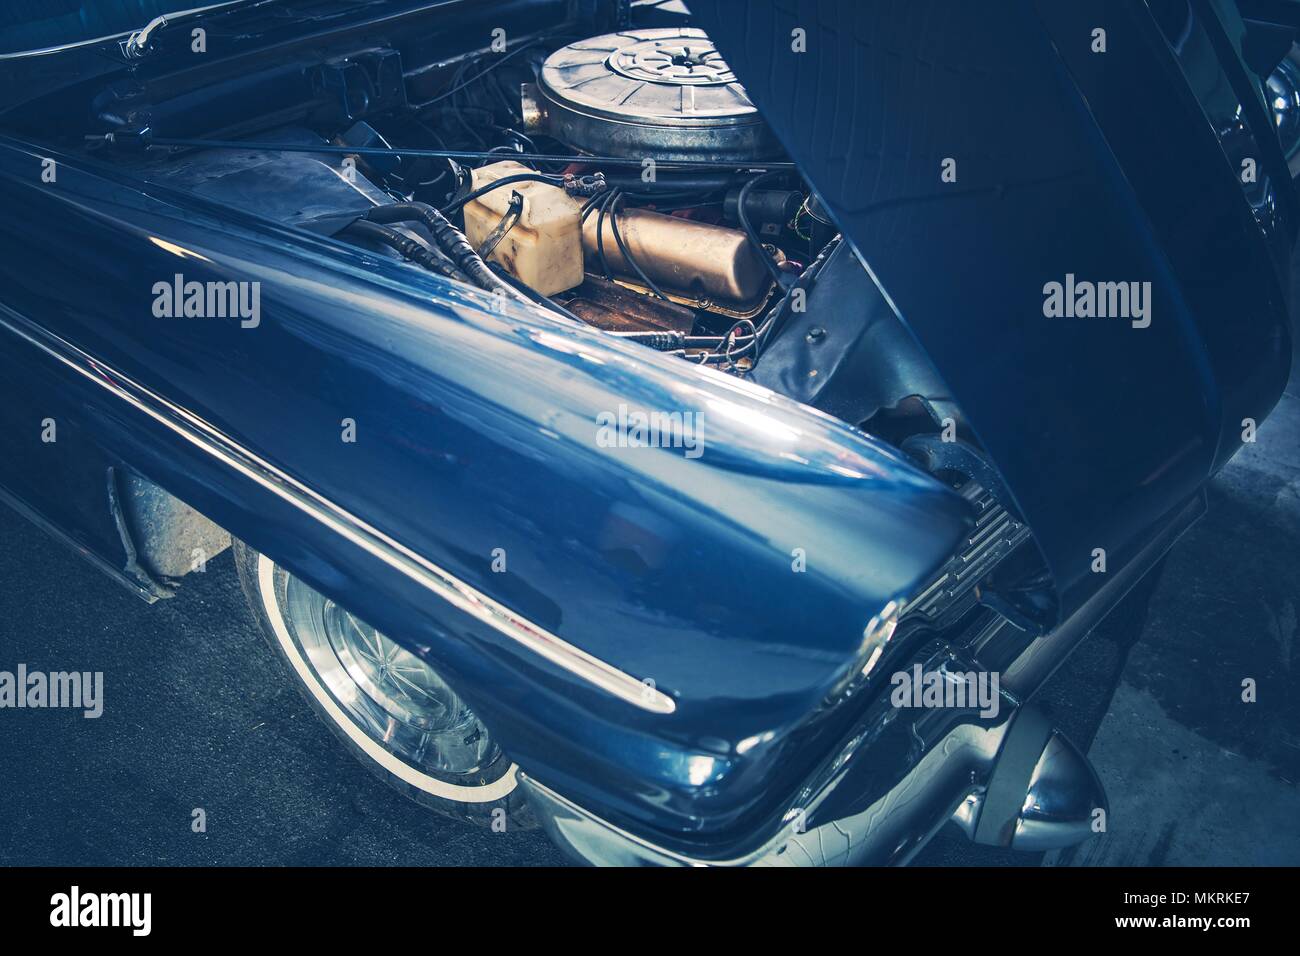 Gebrochene Classic Car mit geöffneter Motorhaube. Closeup Foto. Retro Transport Thema. Stockfoto